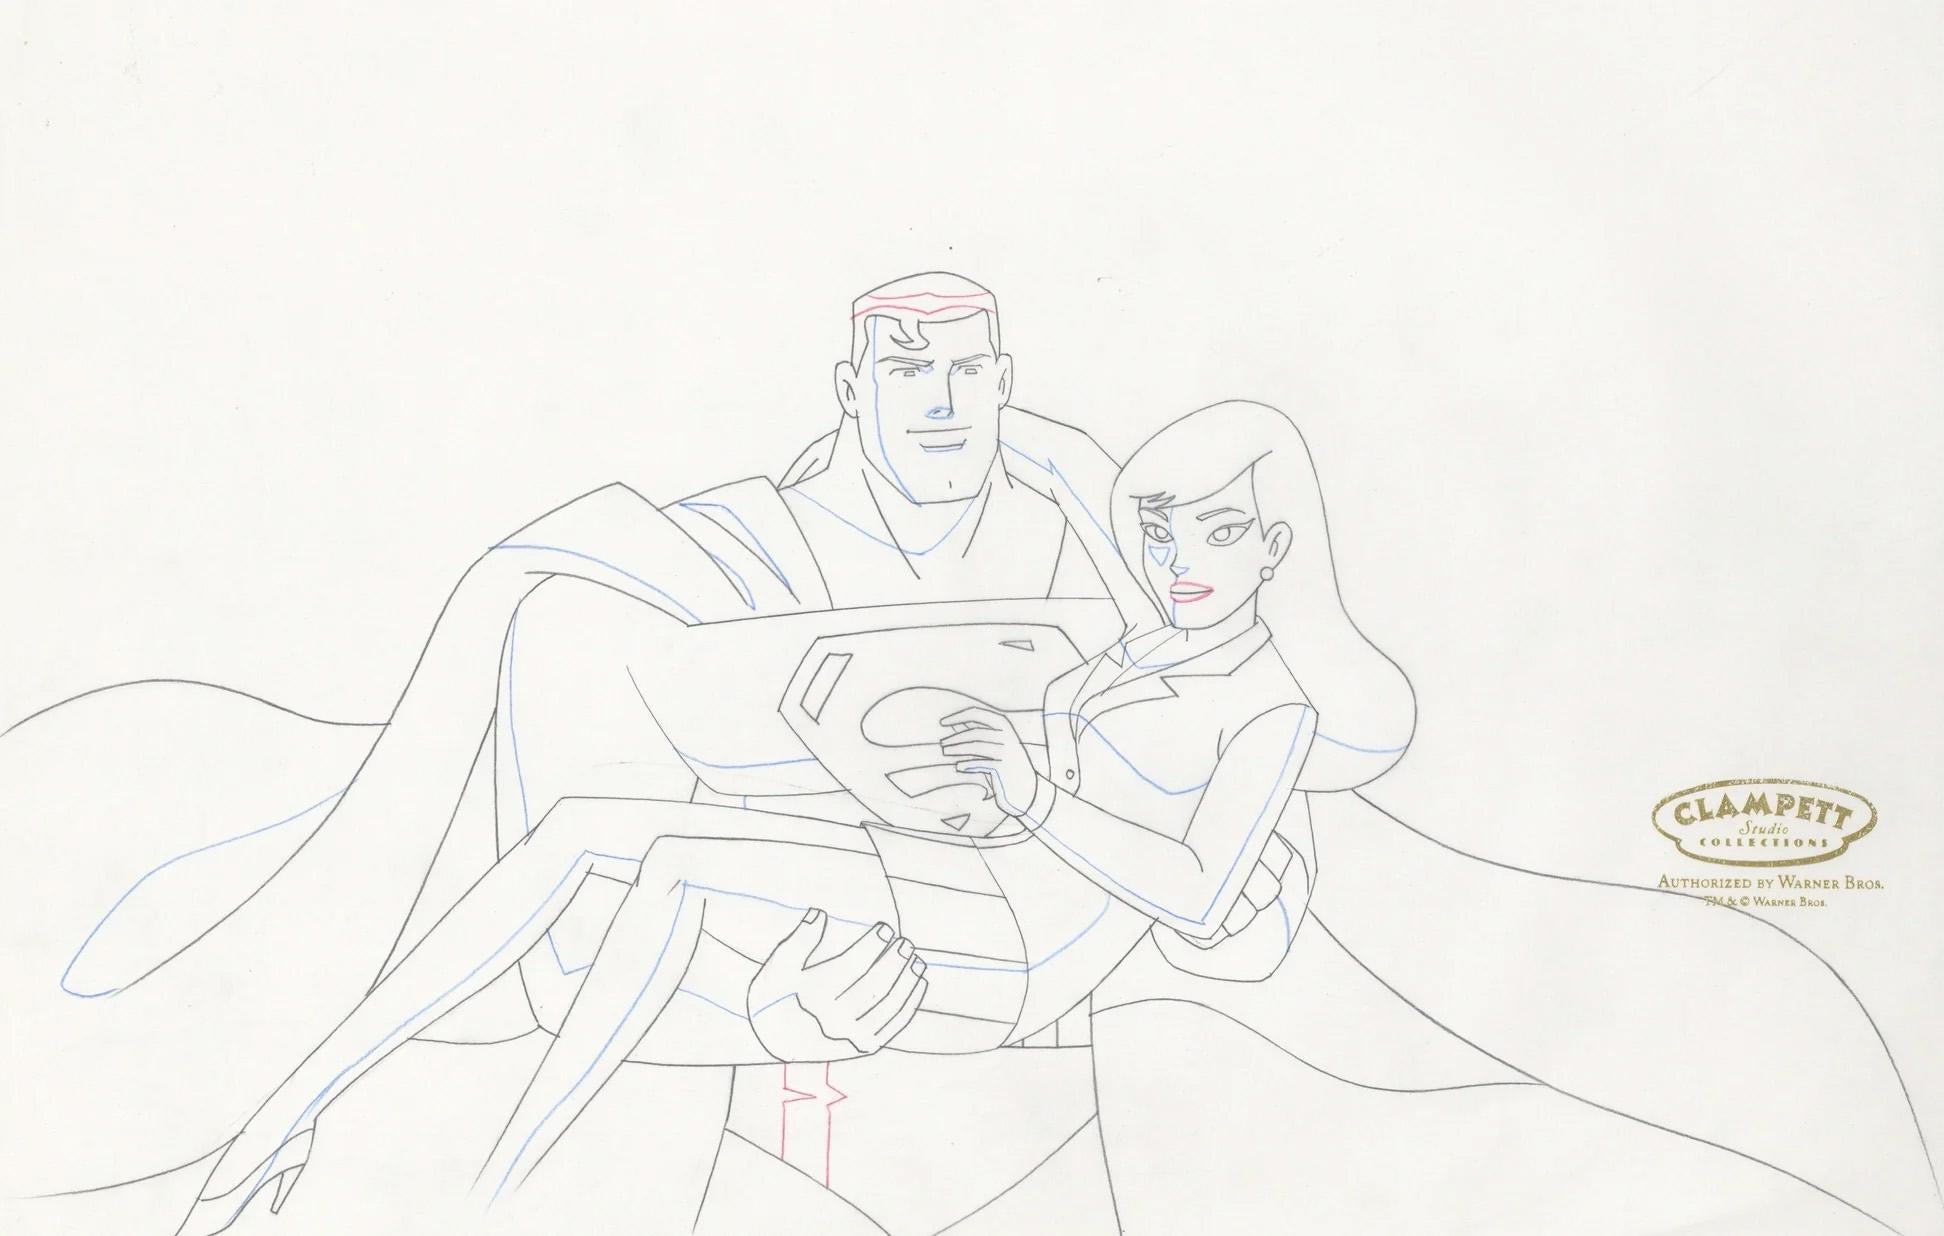 Justice League Original Production Drawing: Superman and Lois Lane - Art by DC Comics Studio Artists